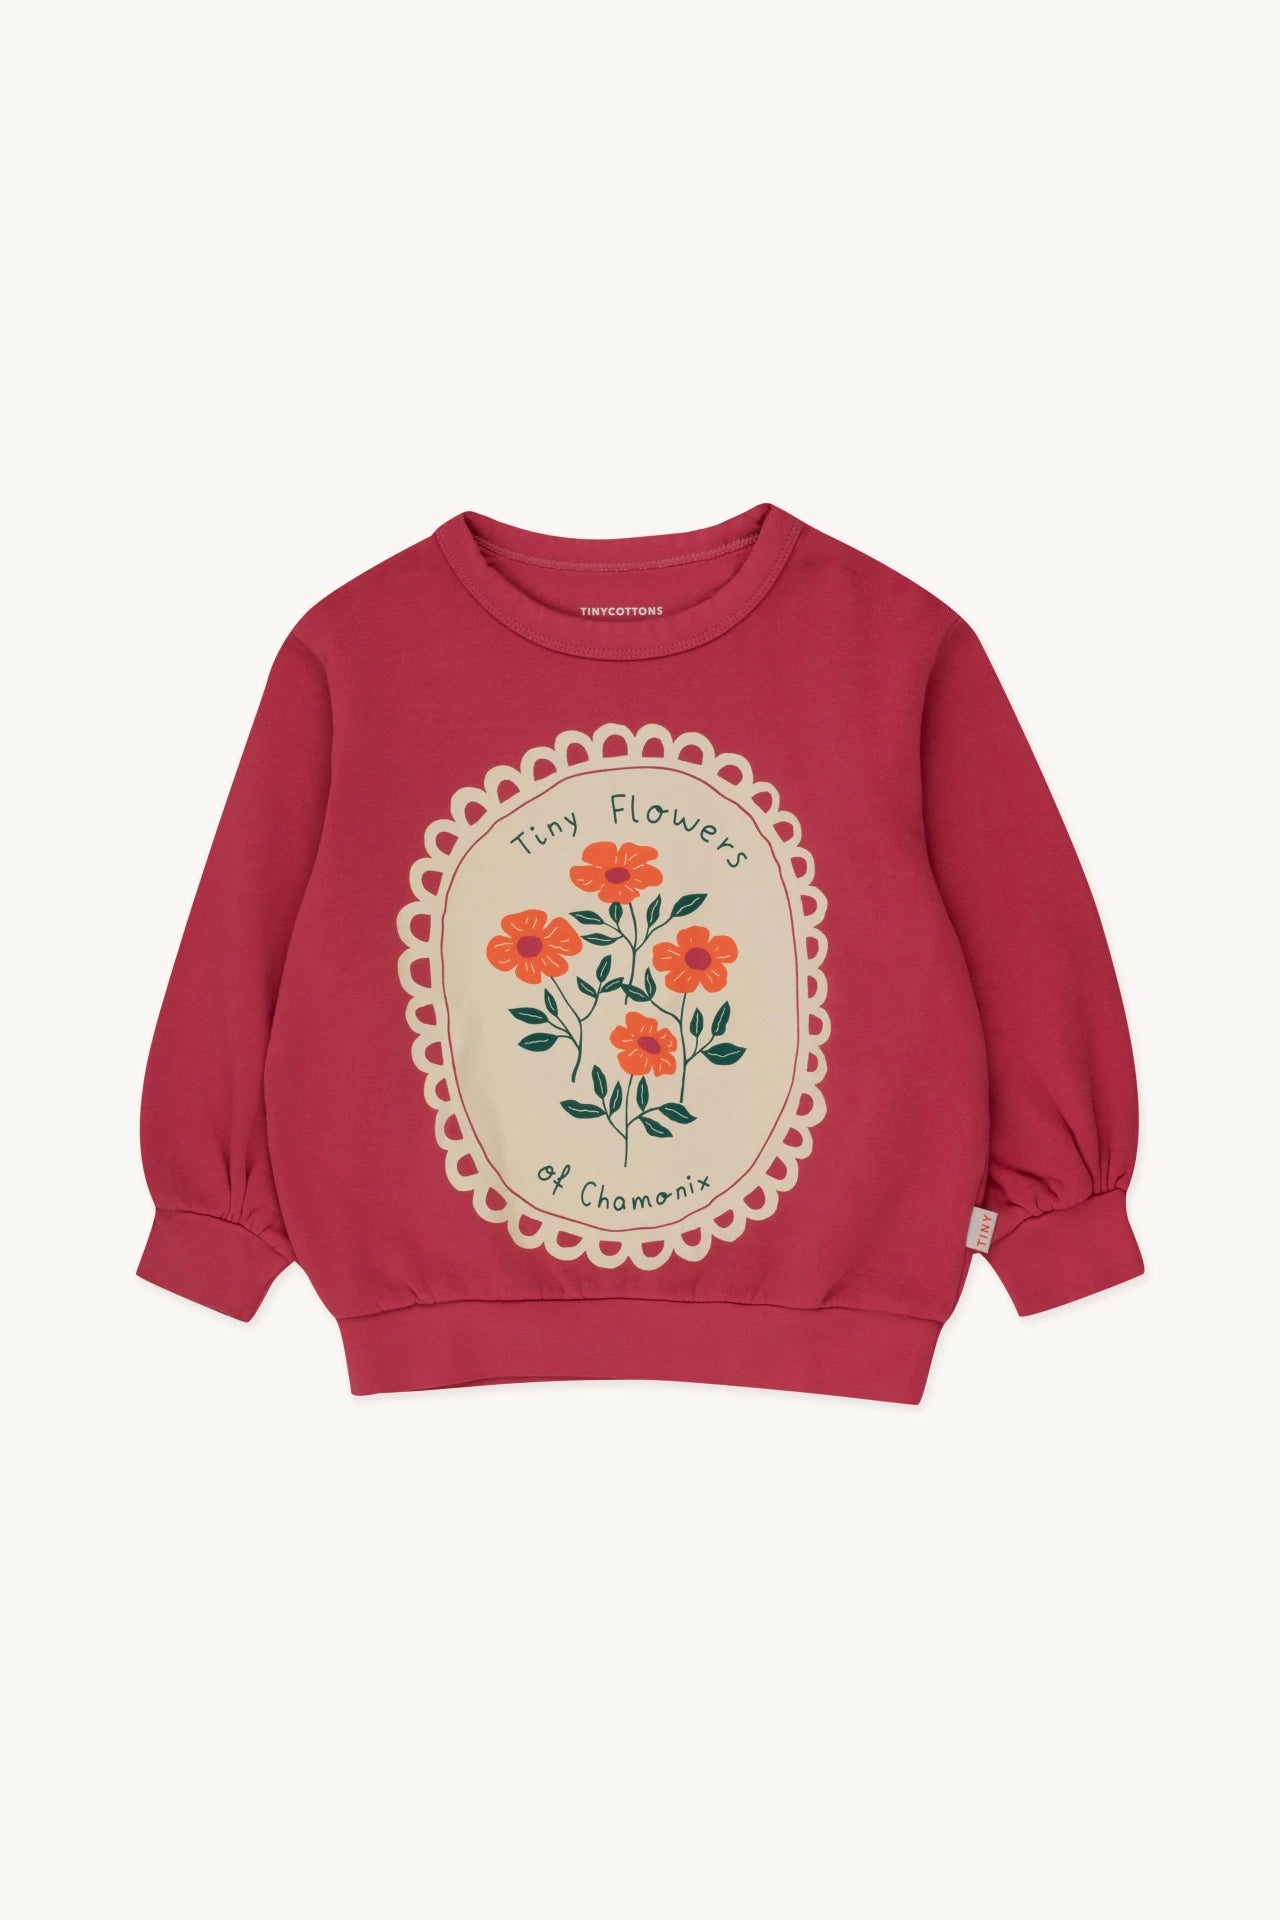 Tiny Cottons Tiny Flowers Sweatshirt - berry